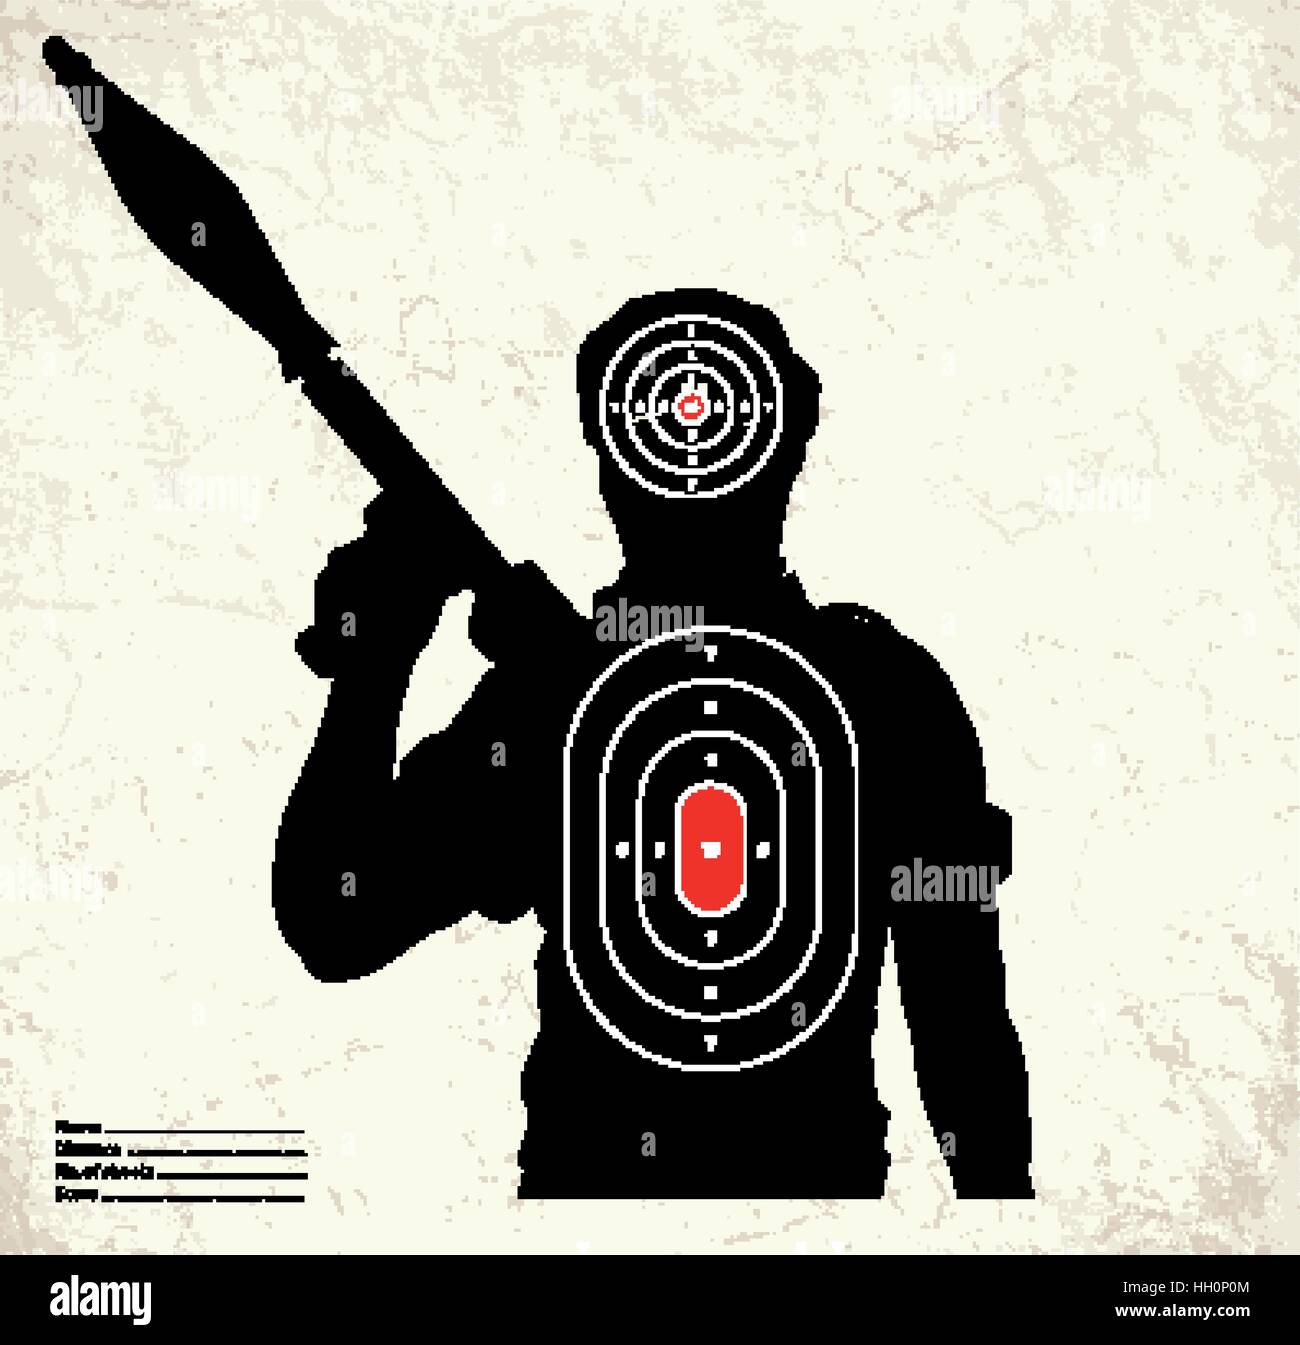 Terrorist - shooting range target Stock Vector